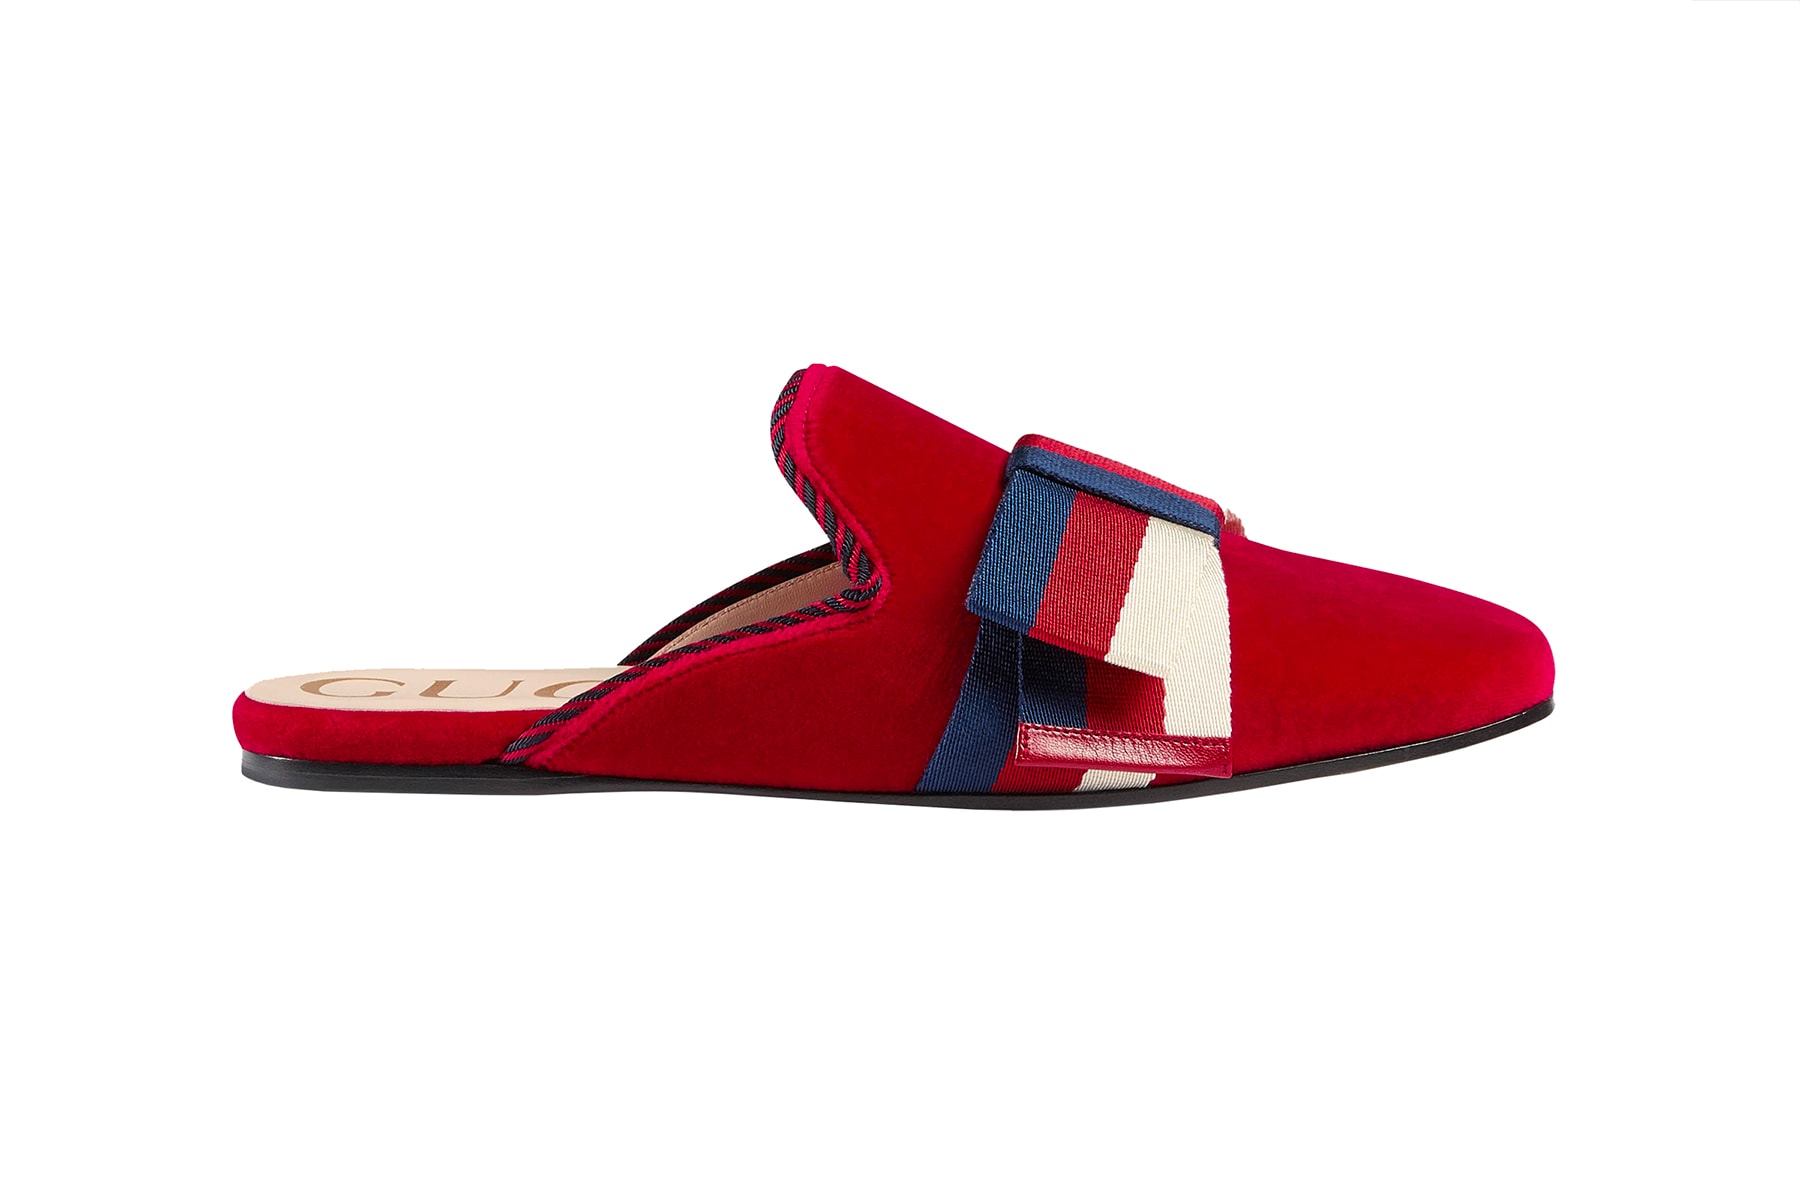 Gucci Sylvie Bow Velvet Slippers in Red & Blue | Hypebae